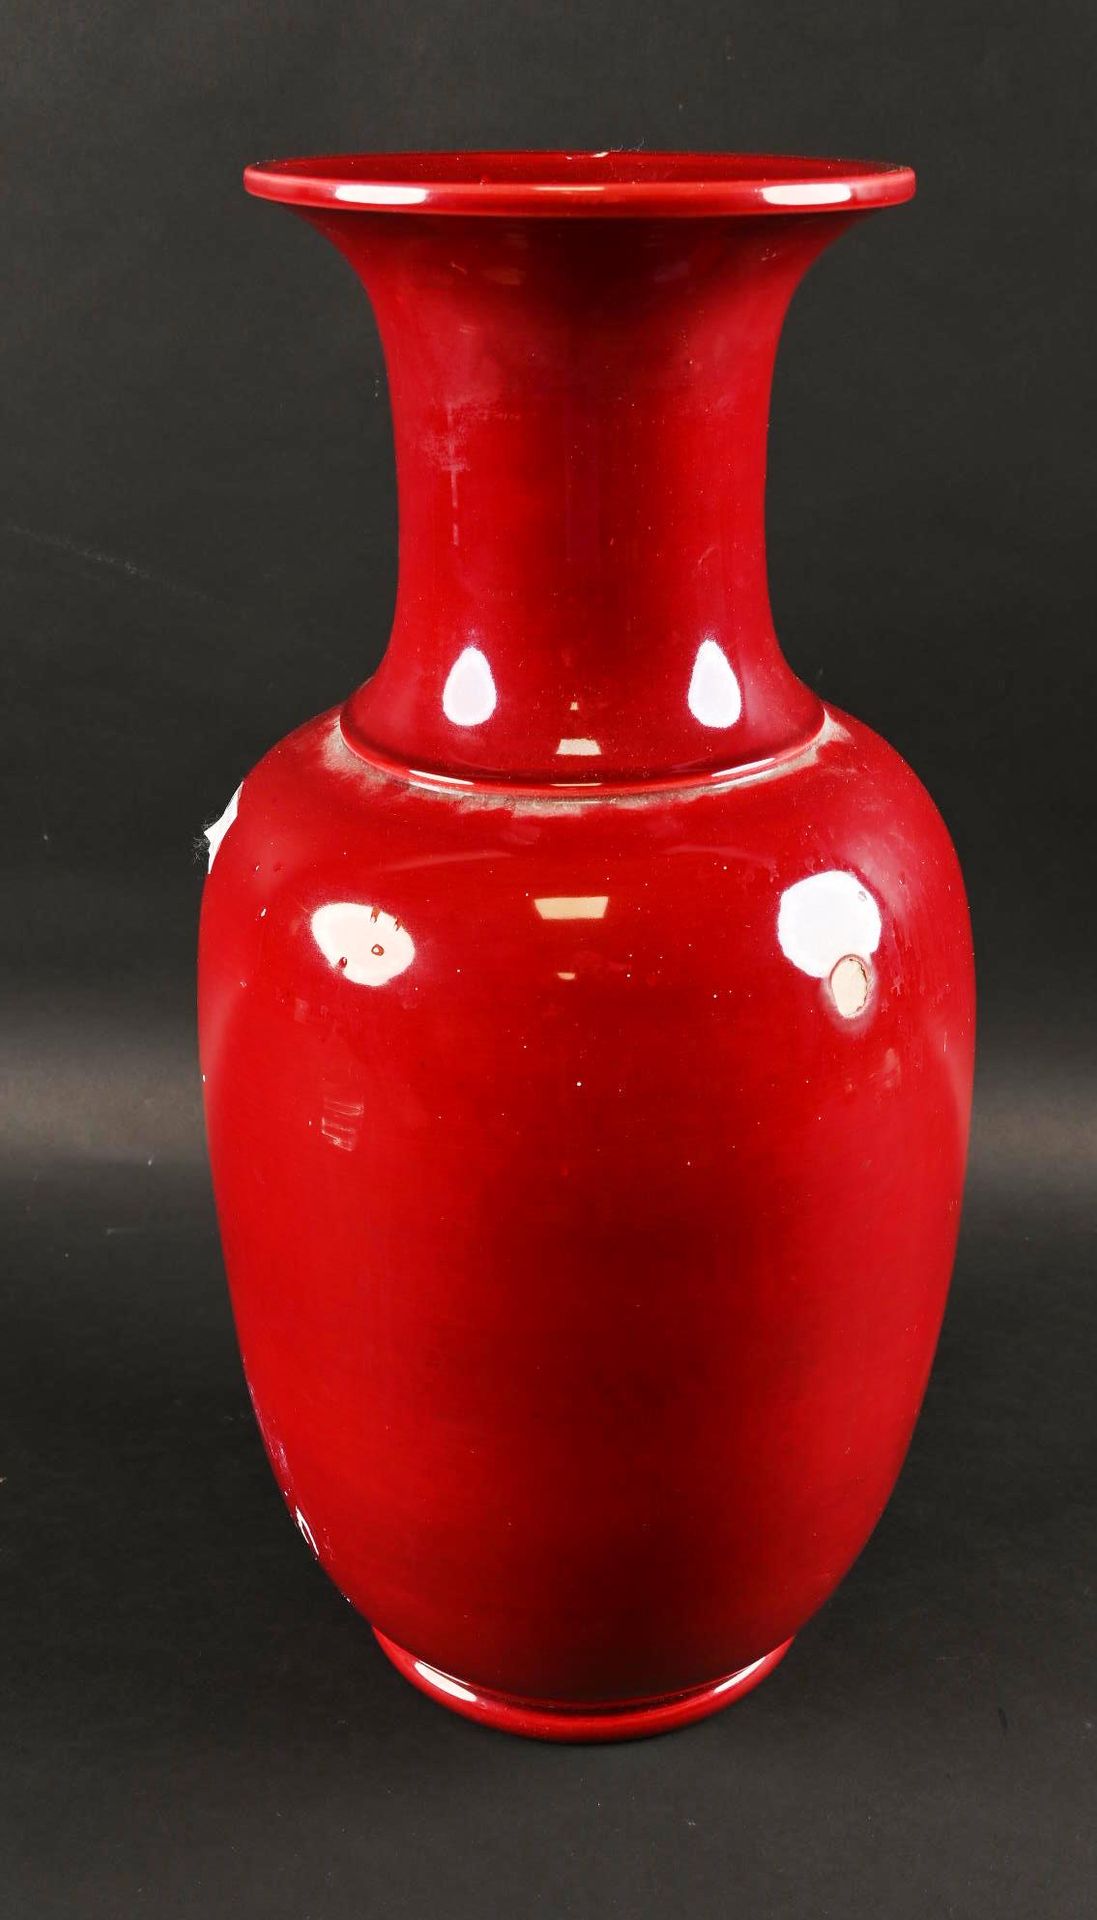 Grand vase en terre cuite vernissée rouge. 大型红色釉面陶器花瓶。

现代工作。

47厘米。在状态（痕迹）中